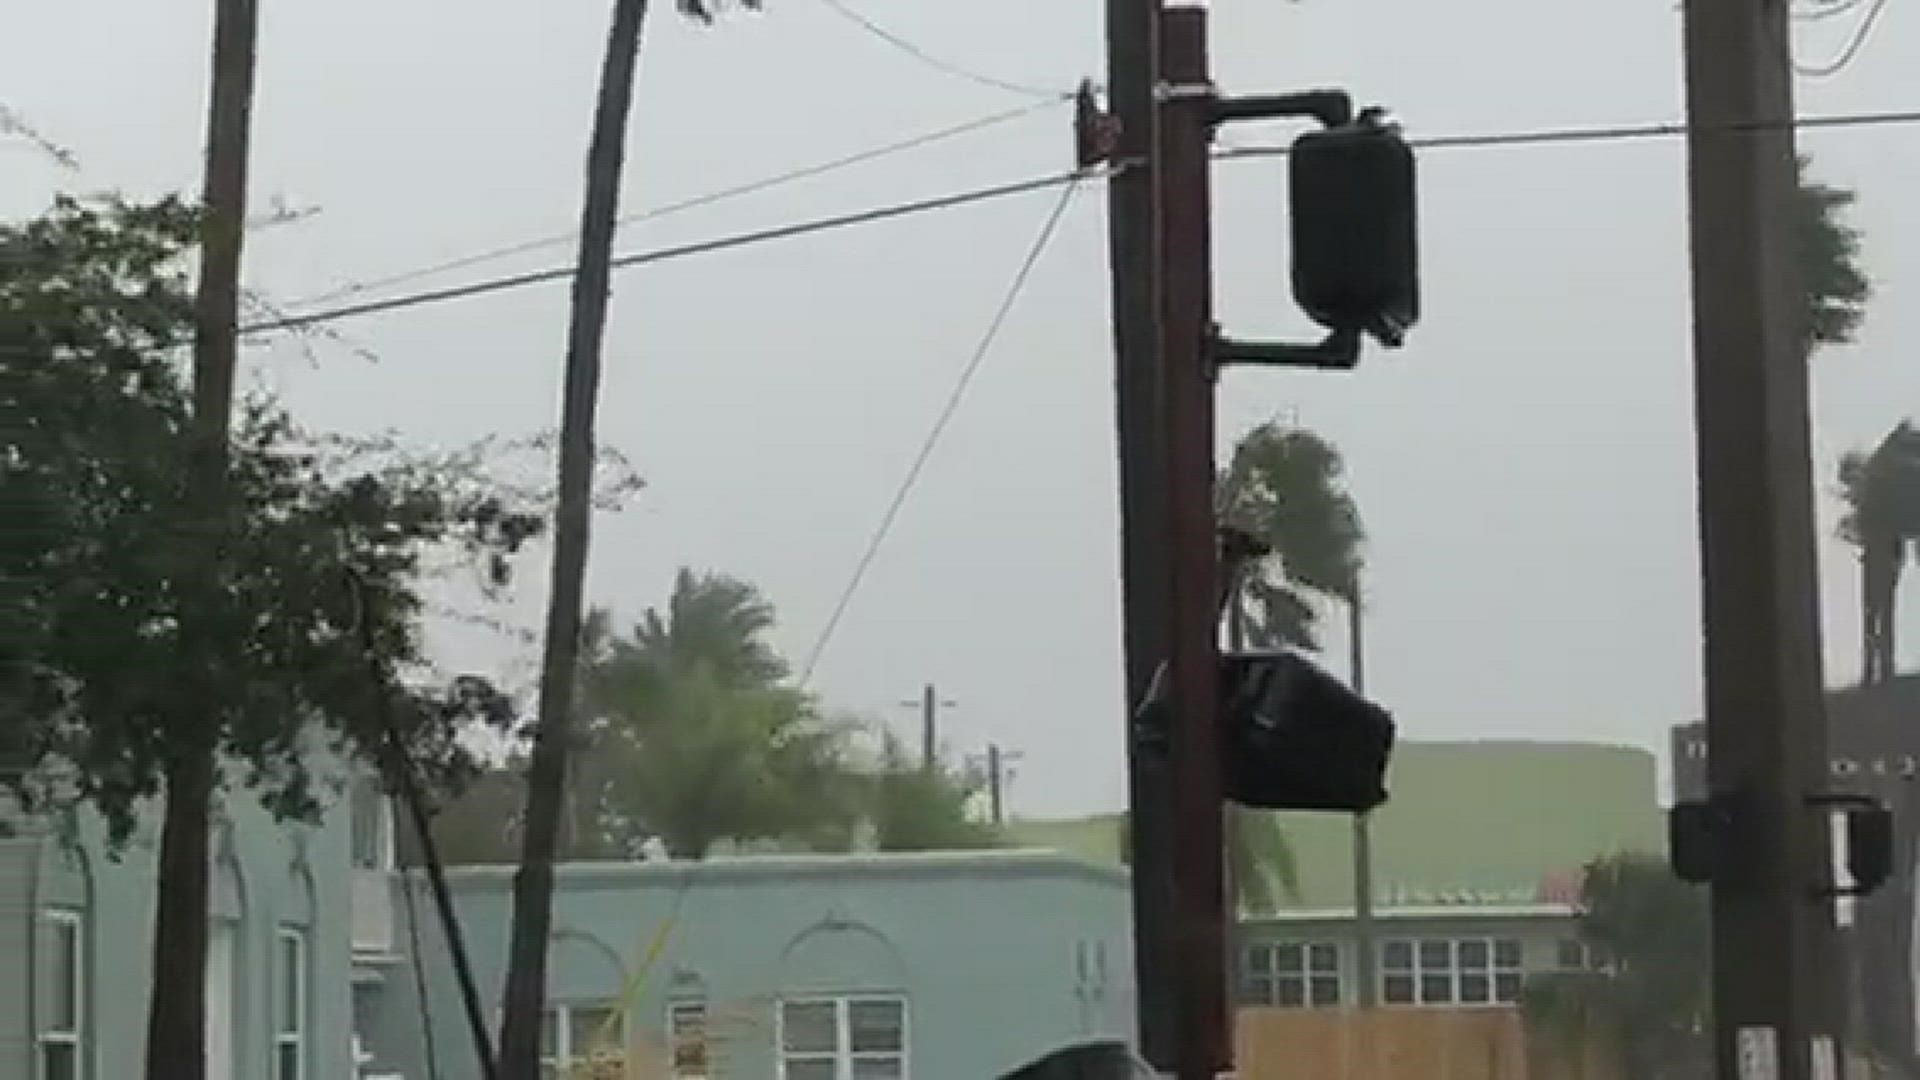 Damaged street crossing sign in St. Augustine
Credit: Renata Di Gregorio